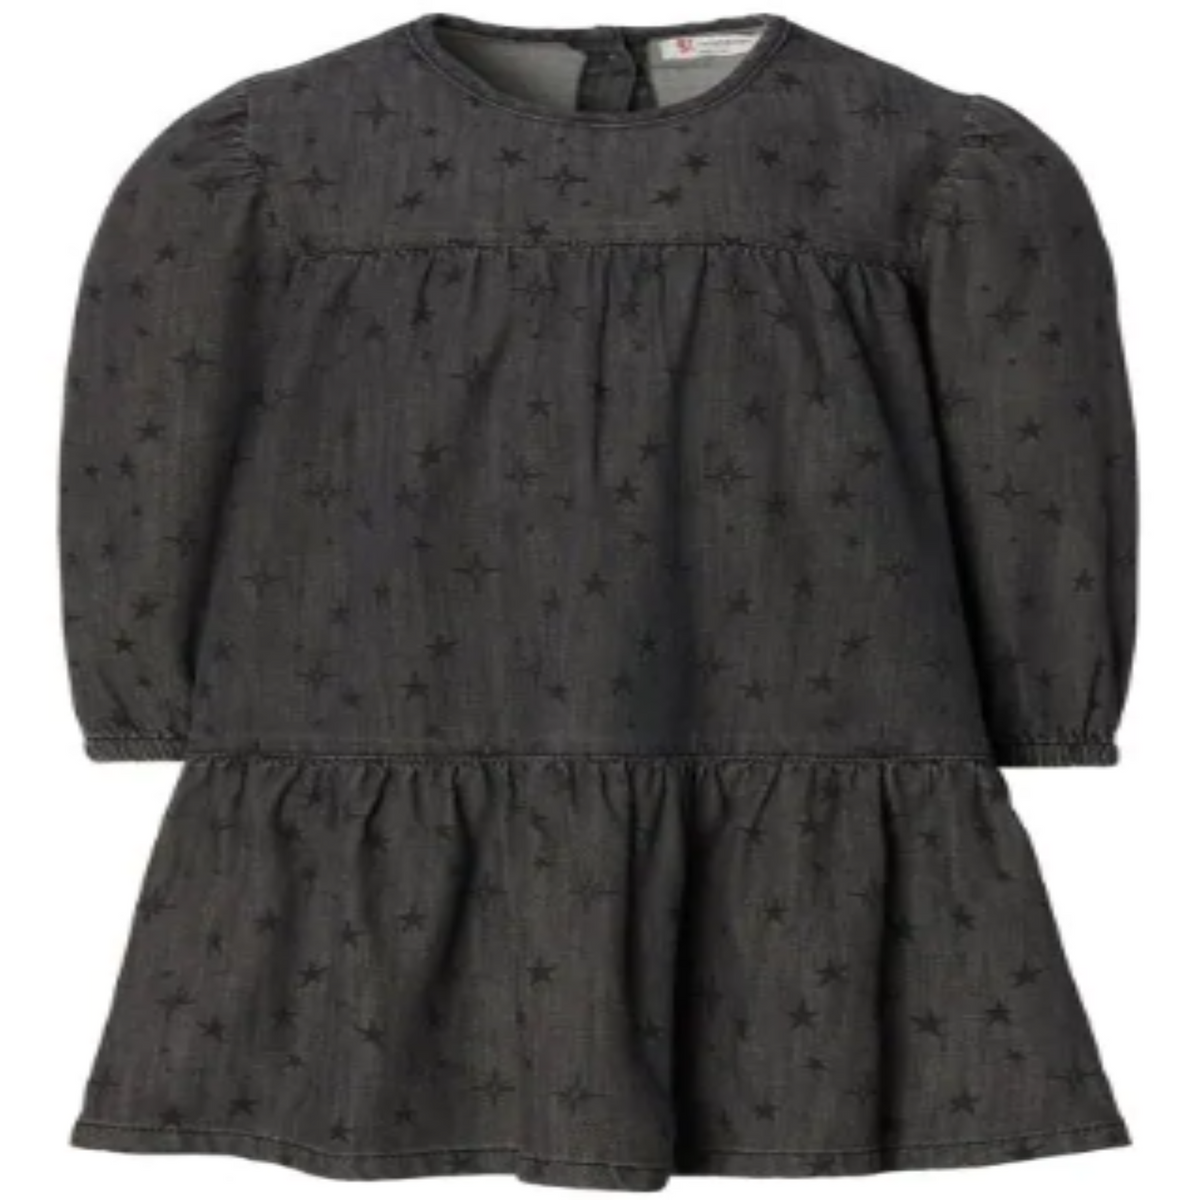 Dress Kidsgrove - Dark Grey Wash